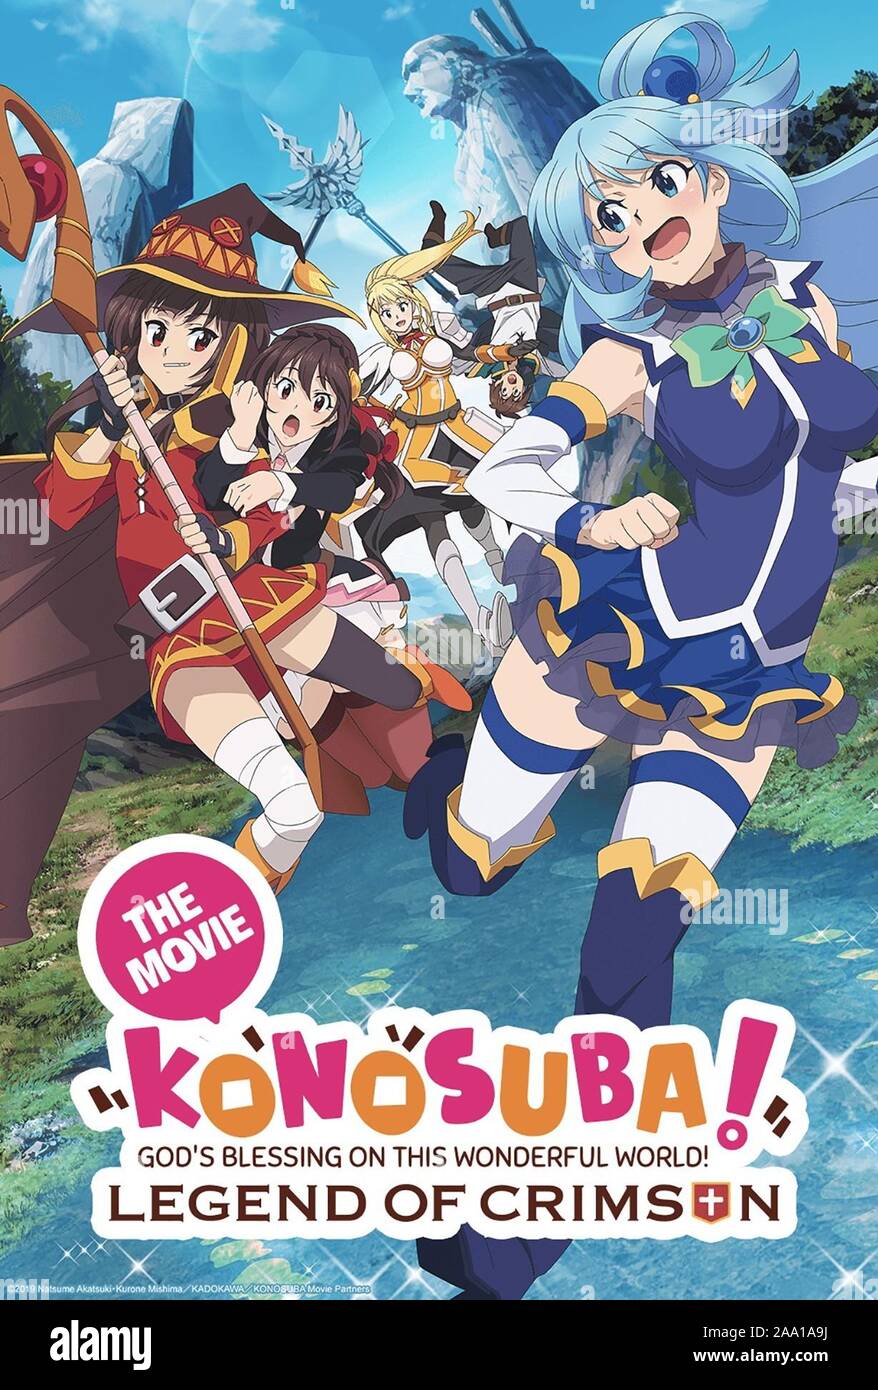 AnimeFla - Kazuma Flamenguista Anime: Konosuba